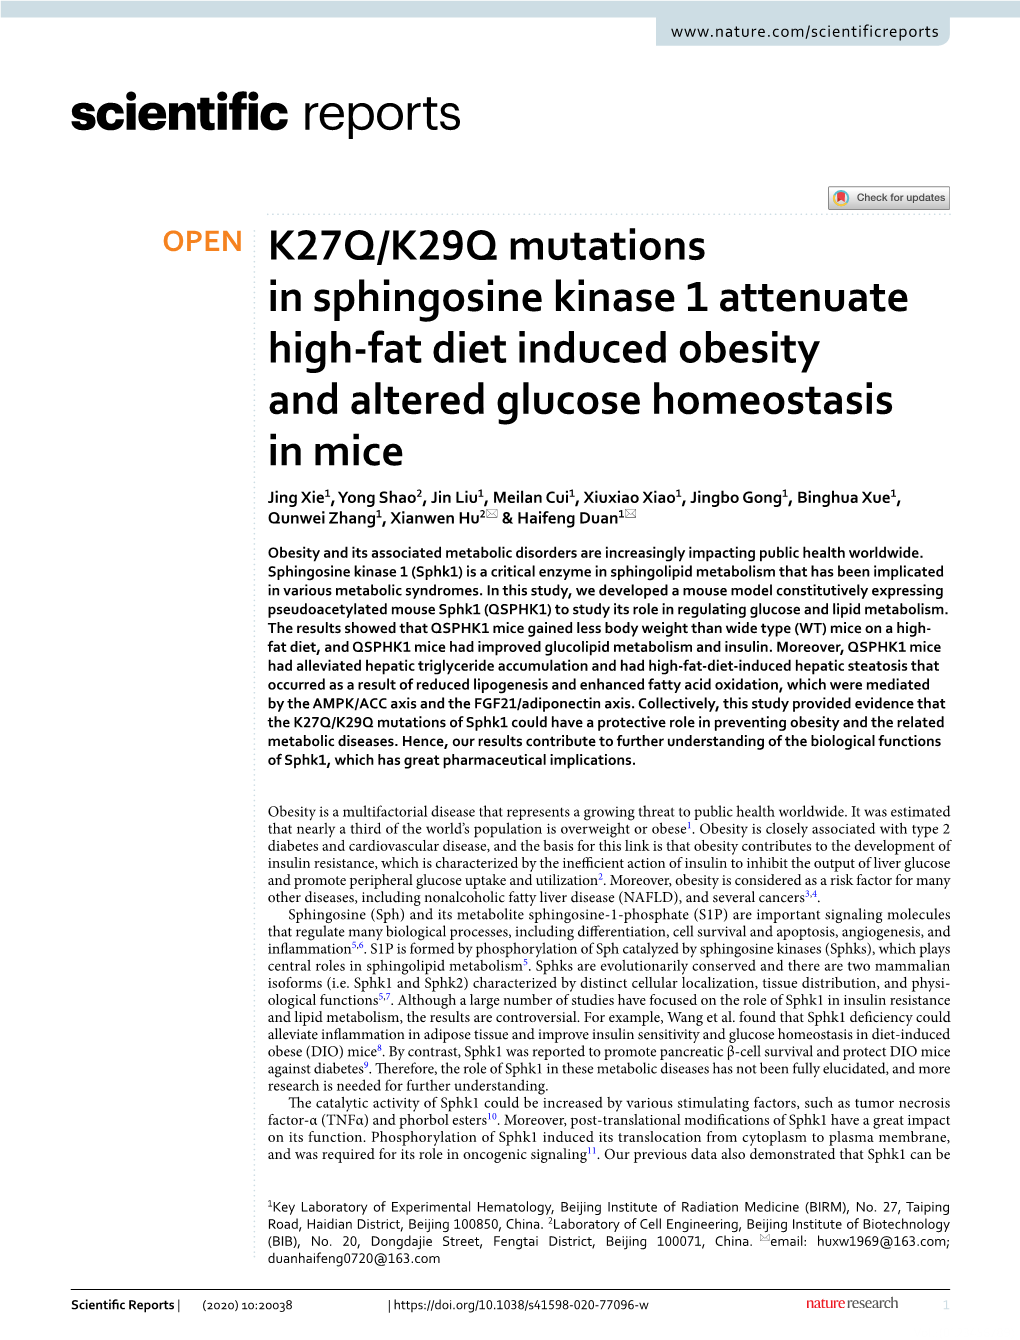 K27Q/K29Q Mutations in Sphingosine Kinase 1 Attenuate High-Fat Diet